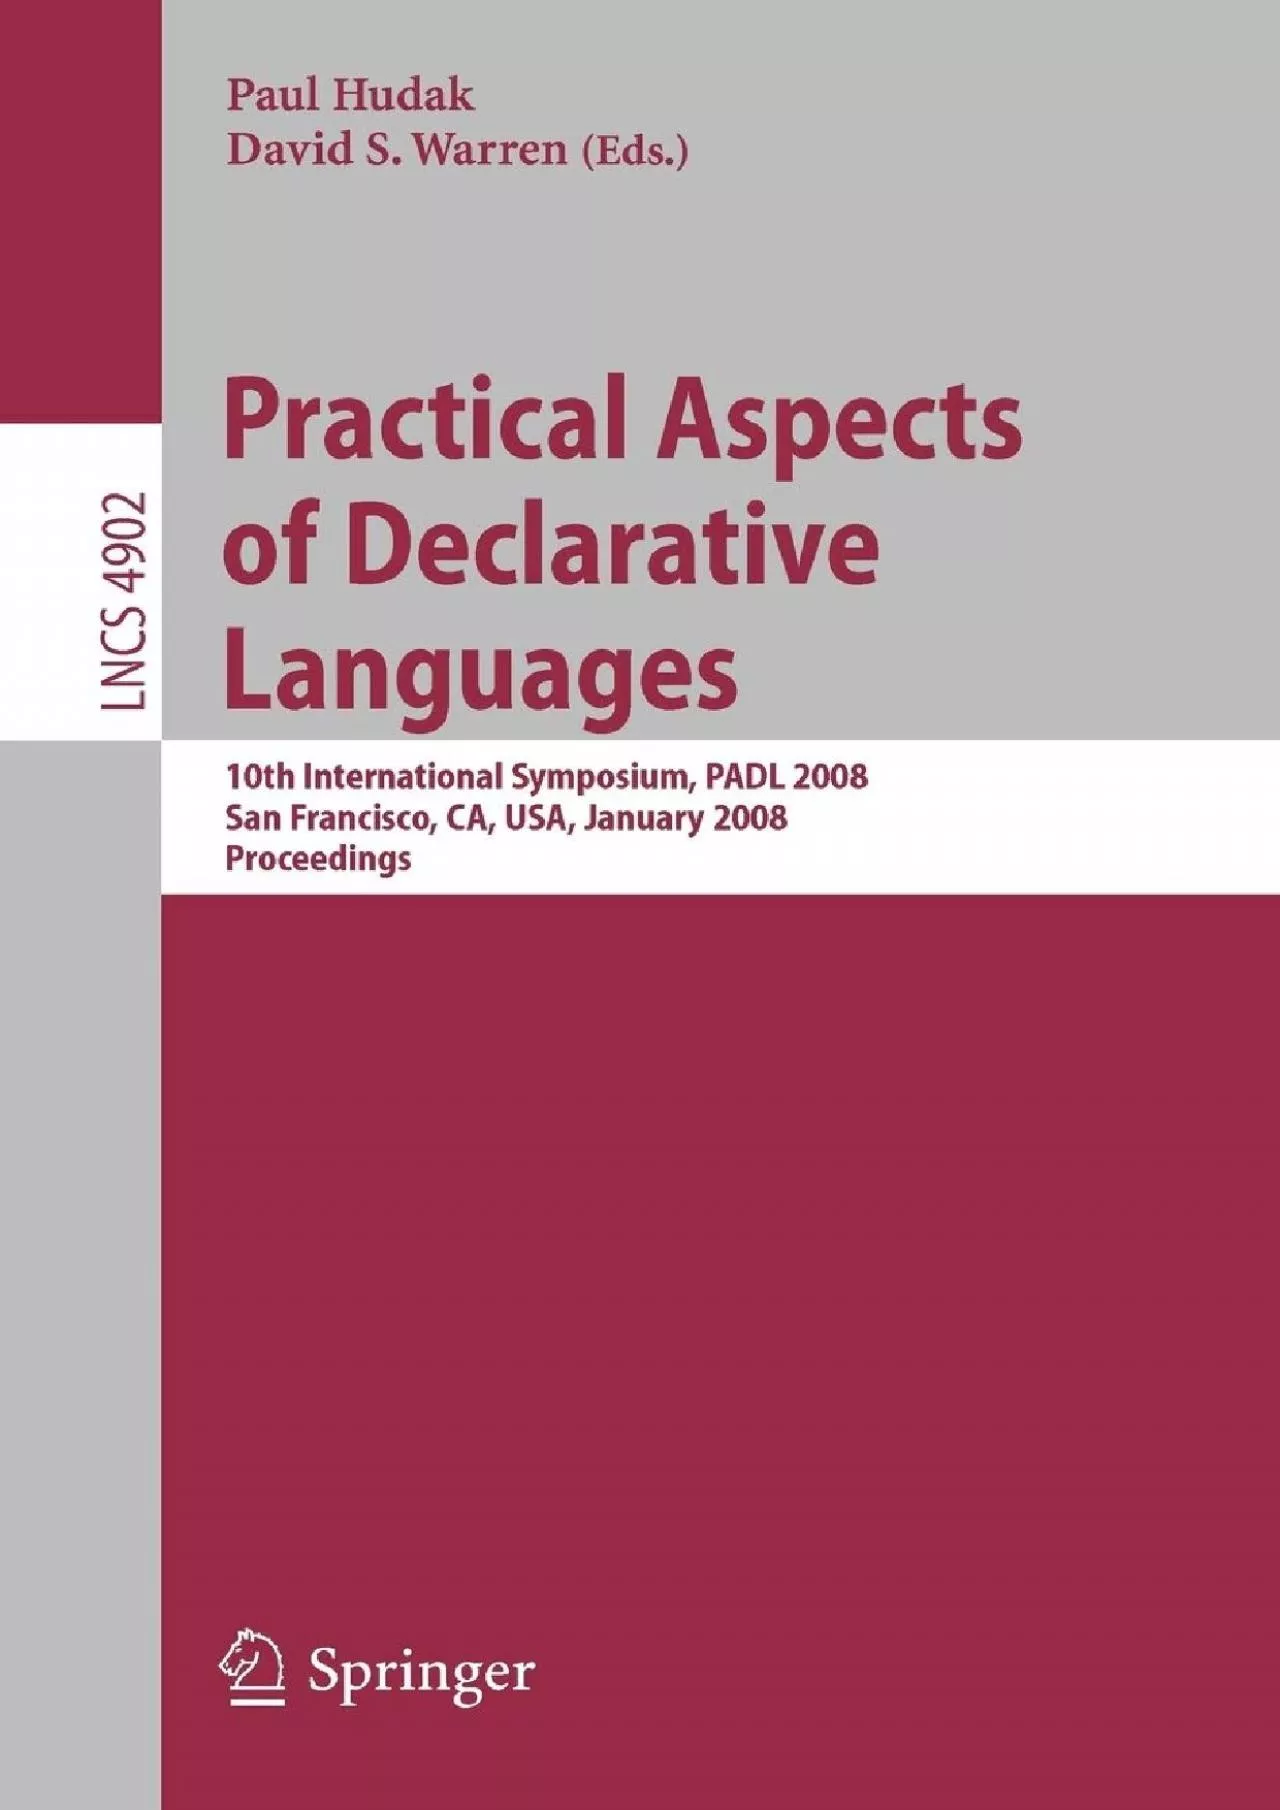 [READING BOOK]-Practical Aspects of Declarative Languages: 10th International Symposium,